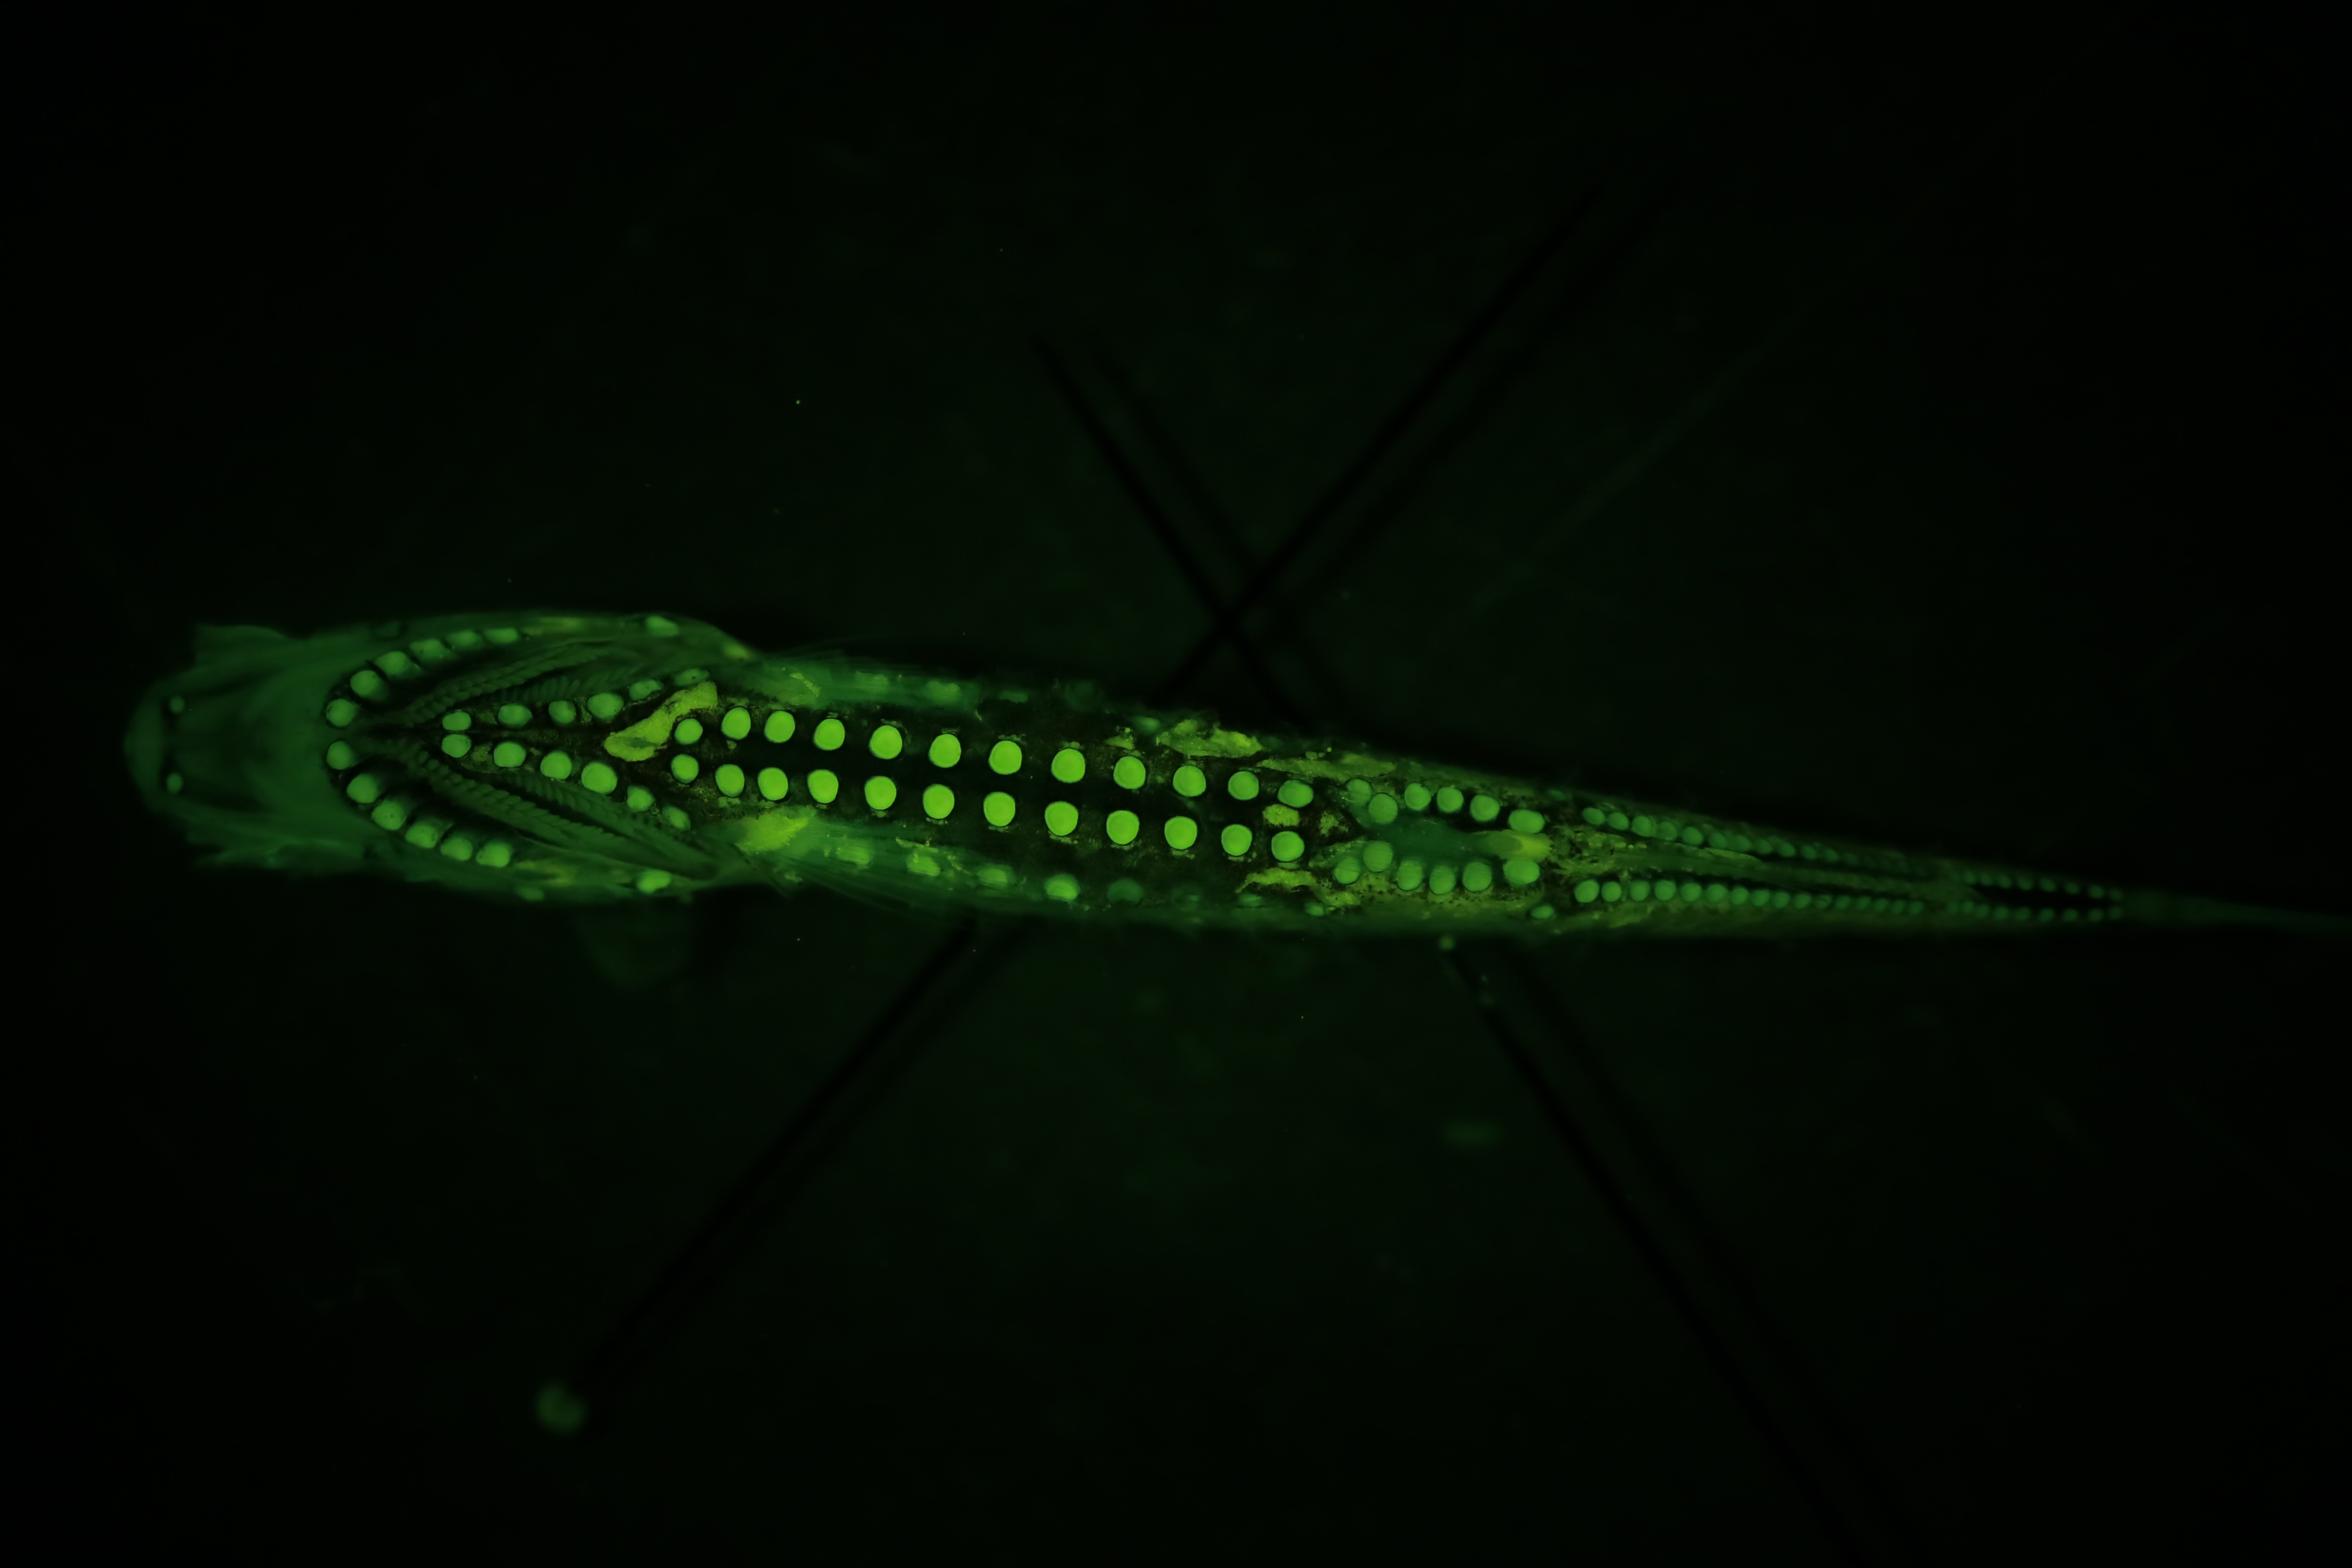 The ventral bioluminescent photophores of Maurolicus muelleri viewed under fluorescent light. Image: Wen-Sung Chung